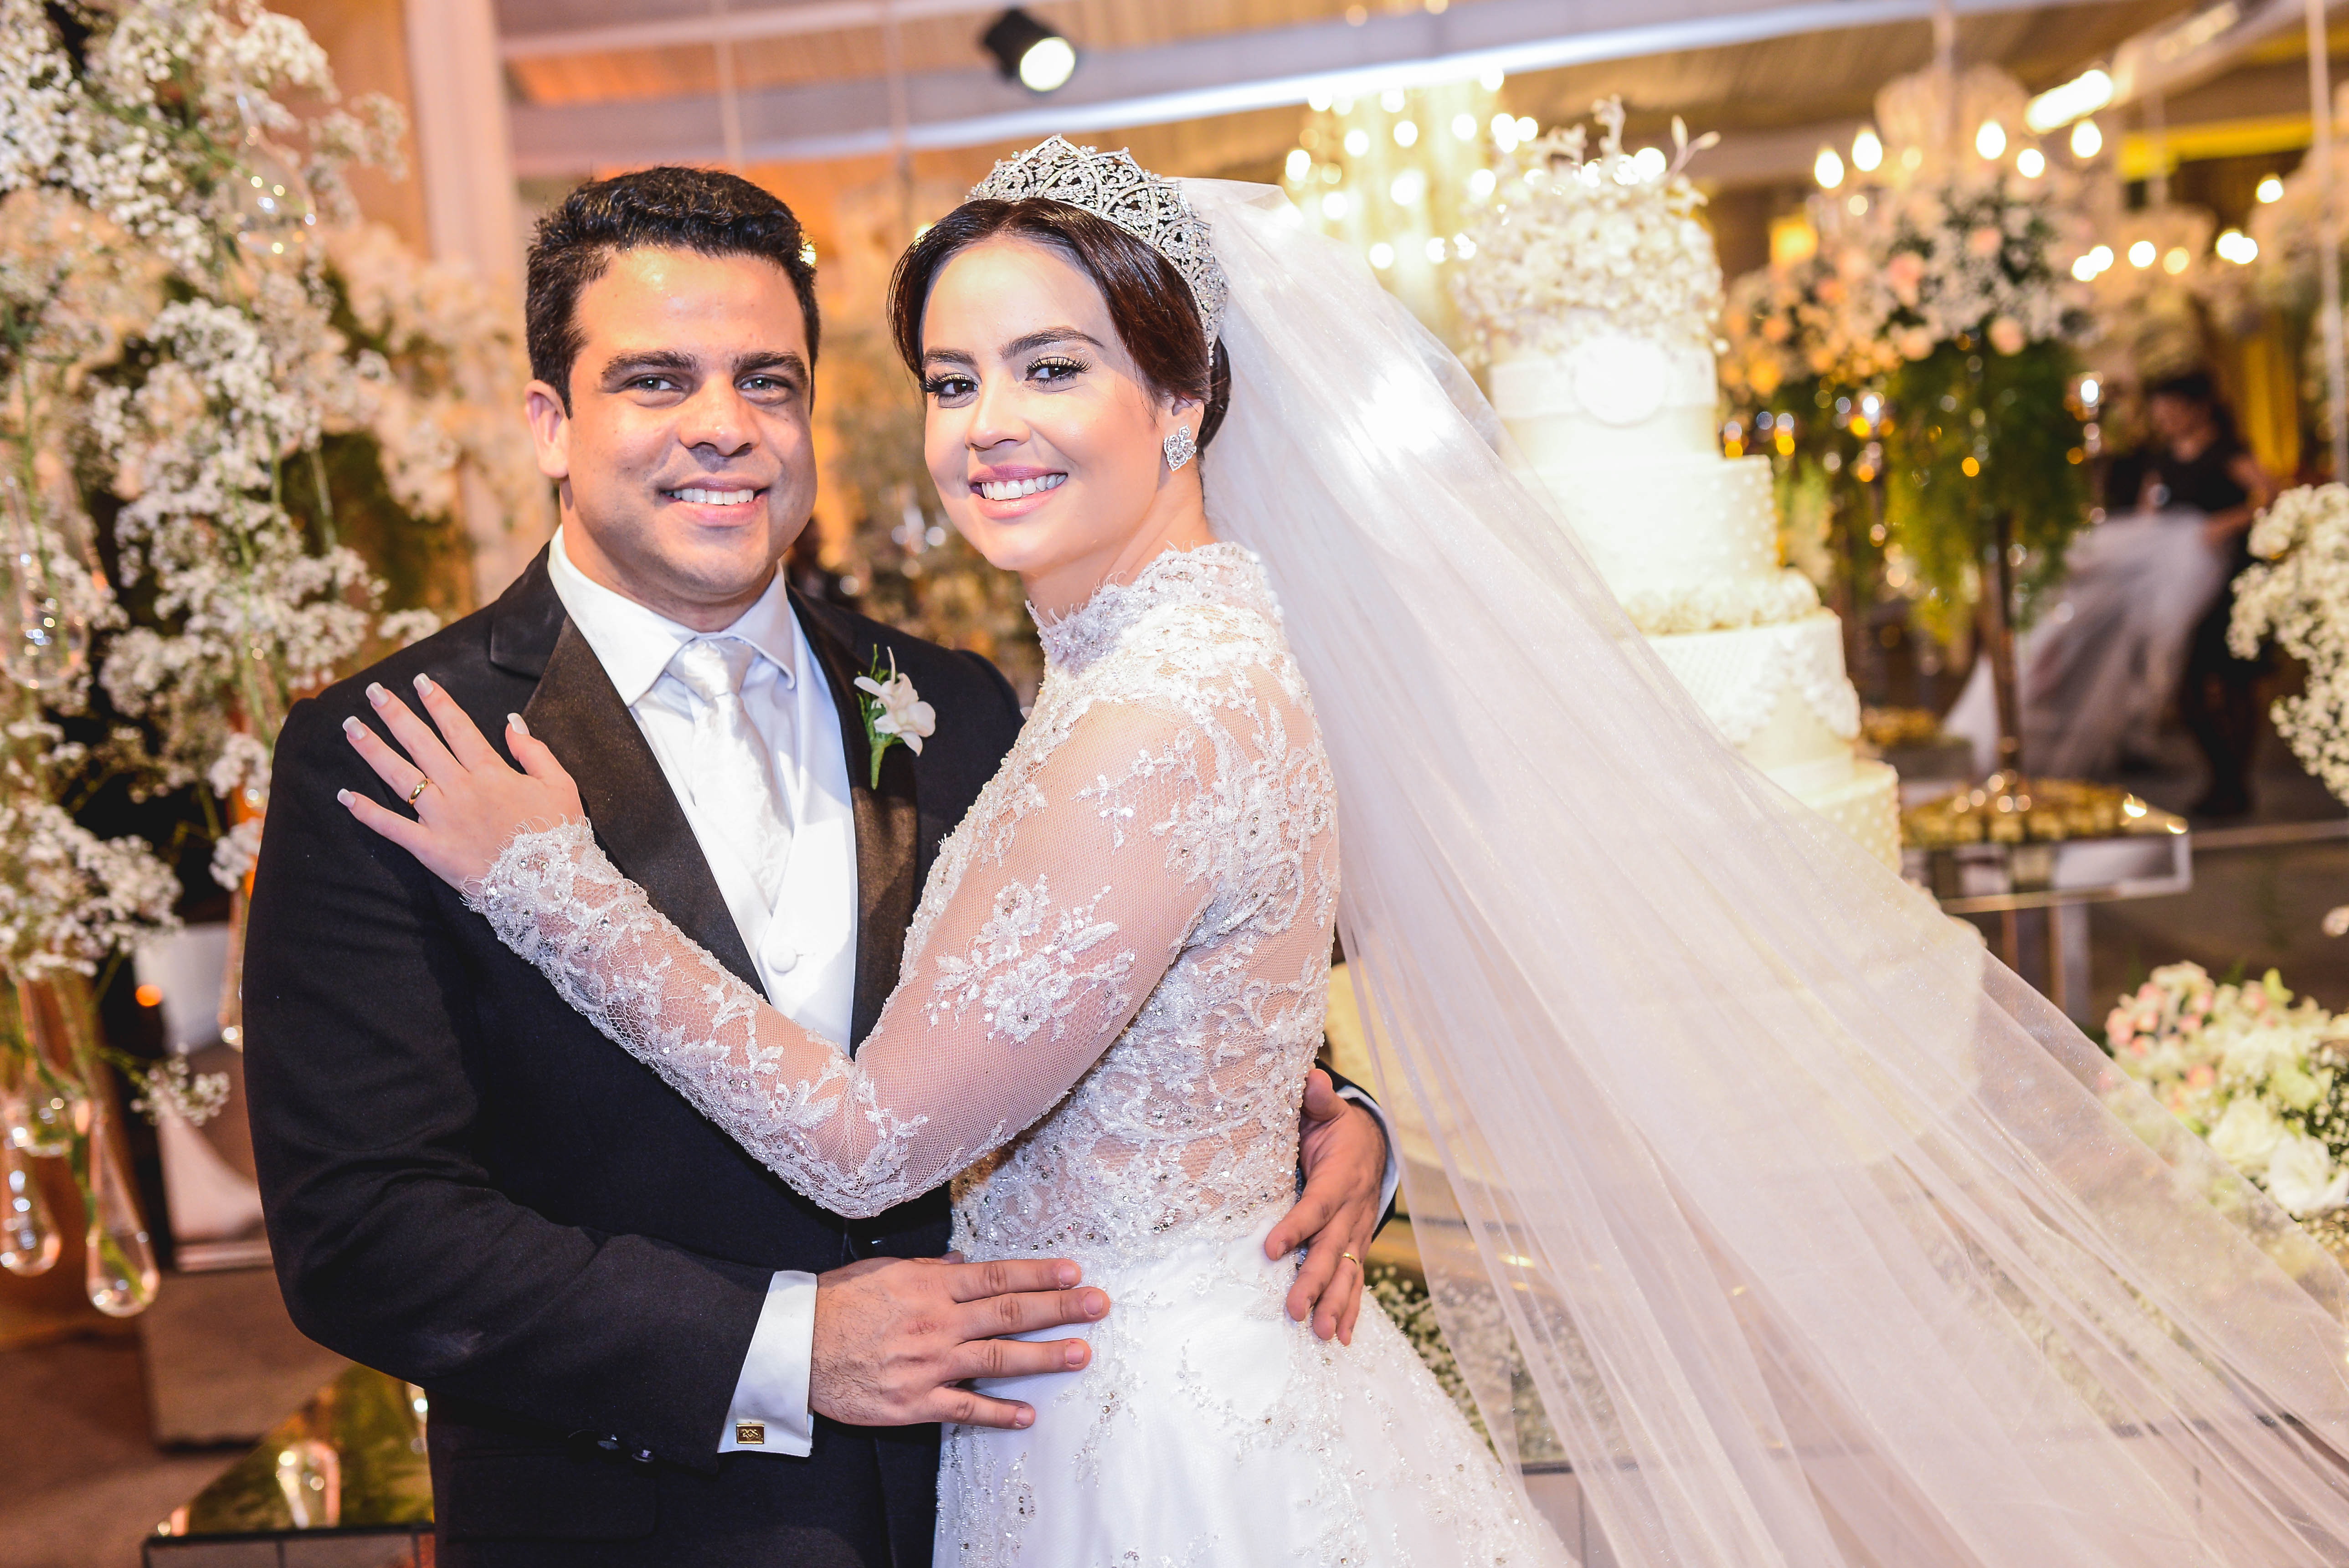 Wedding Day | Rachel Torres de Melo & Igor Pires dizem “sim” no Lulla’s Athénée